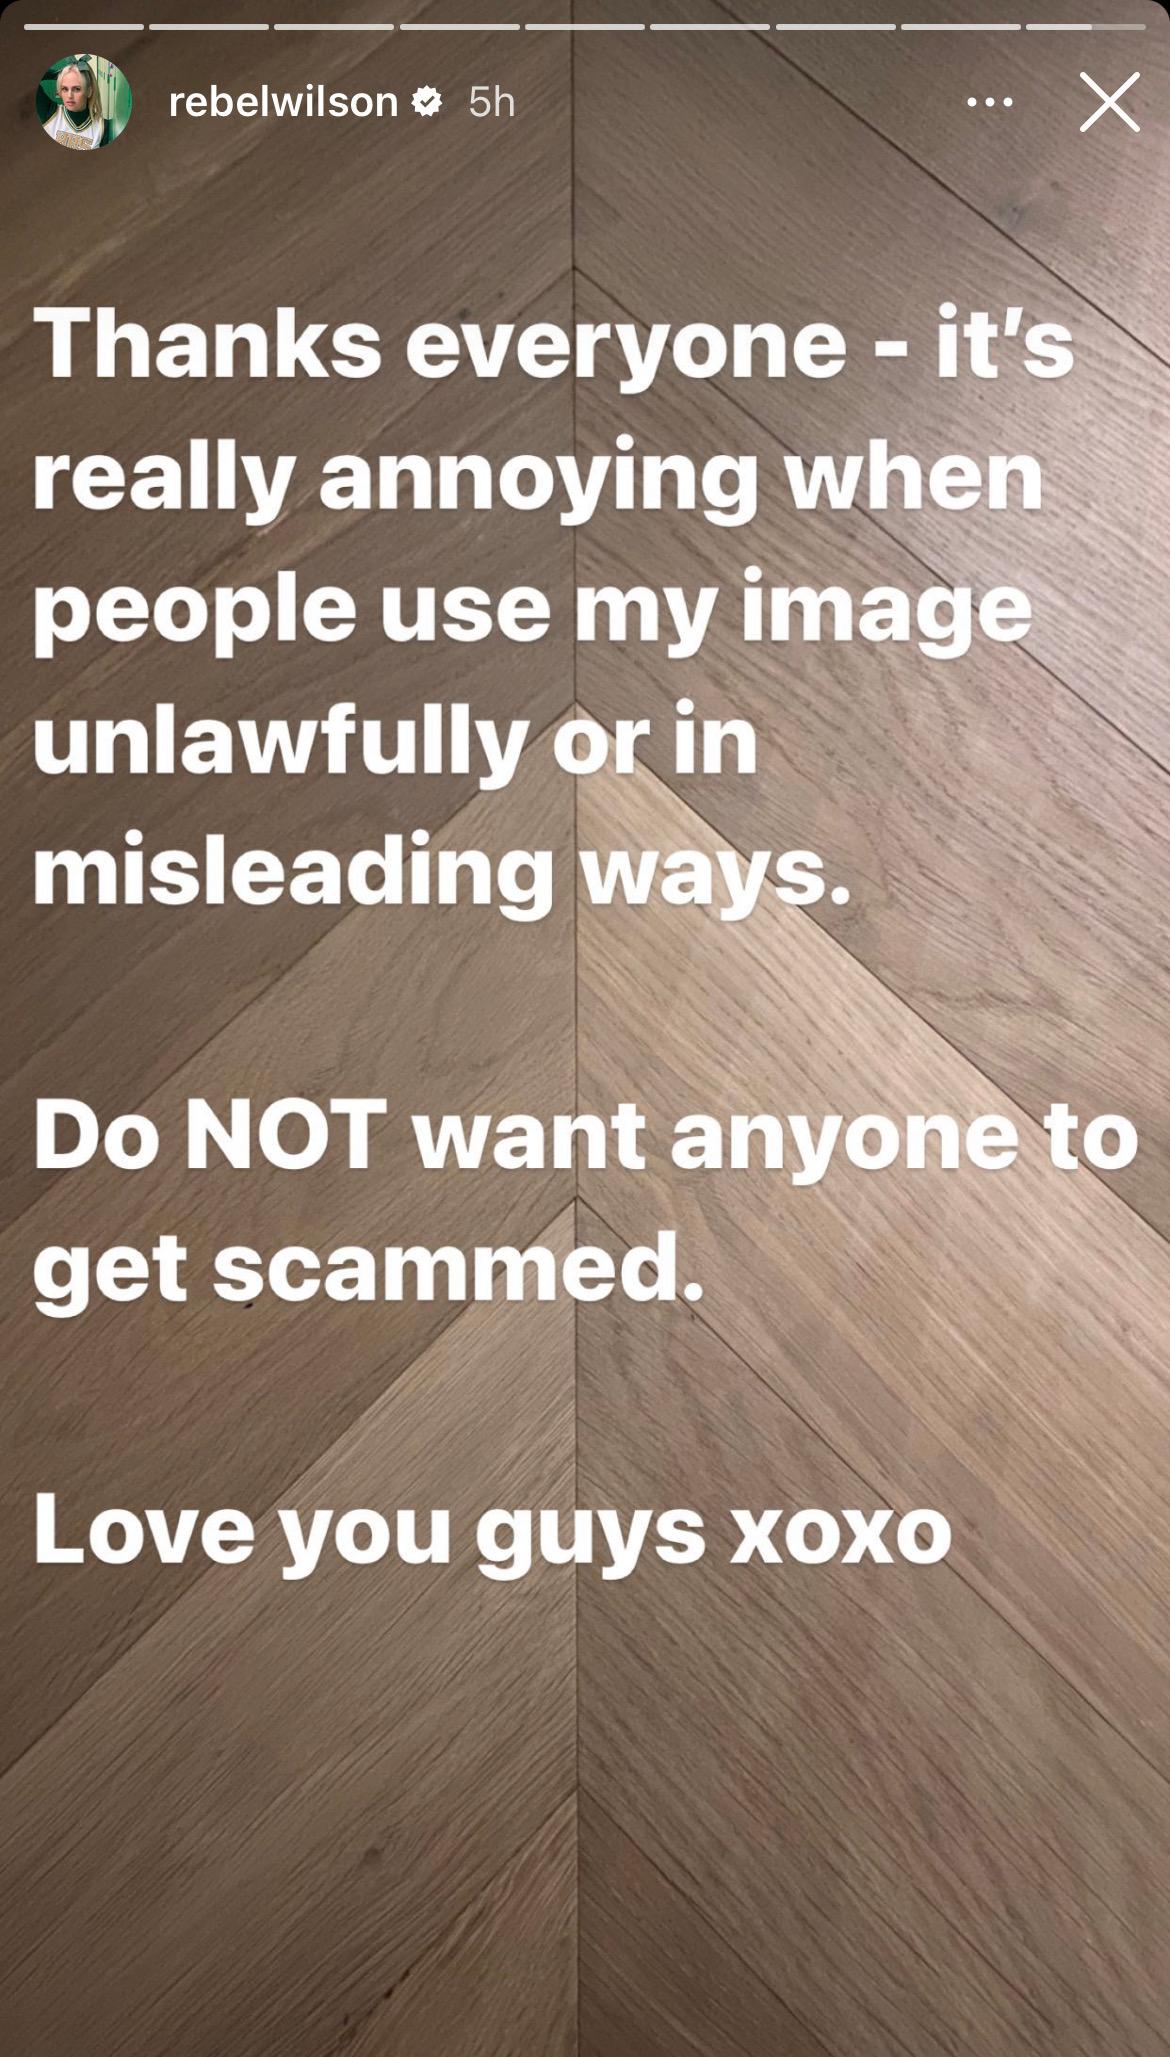 Rebel Wilson's post on her Instagram story